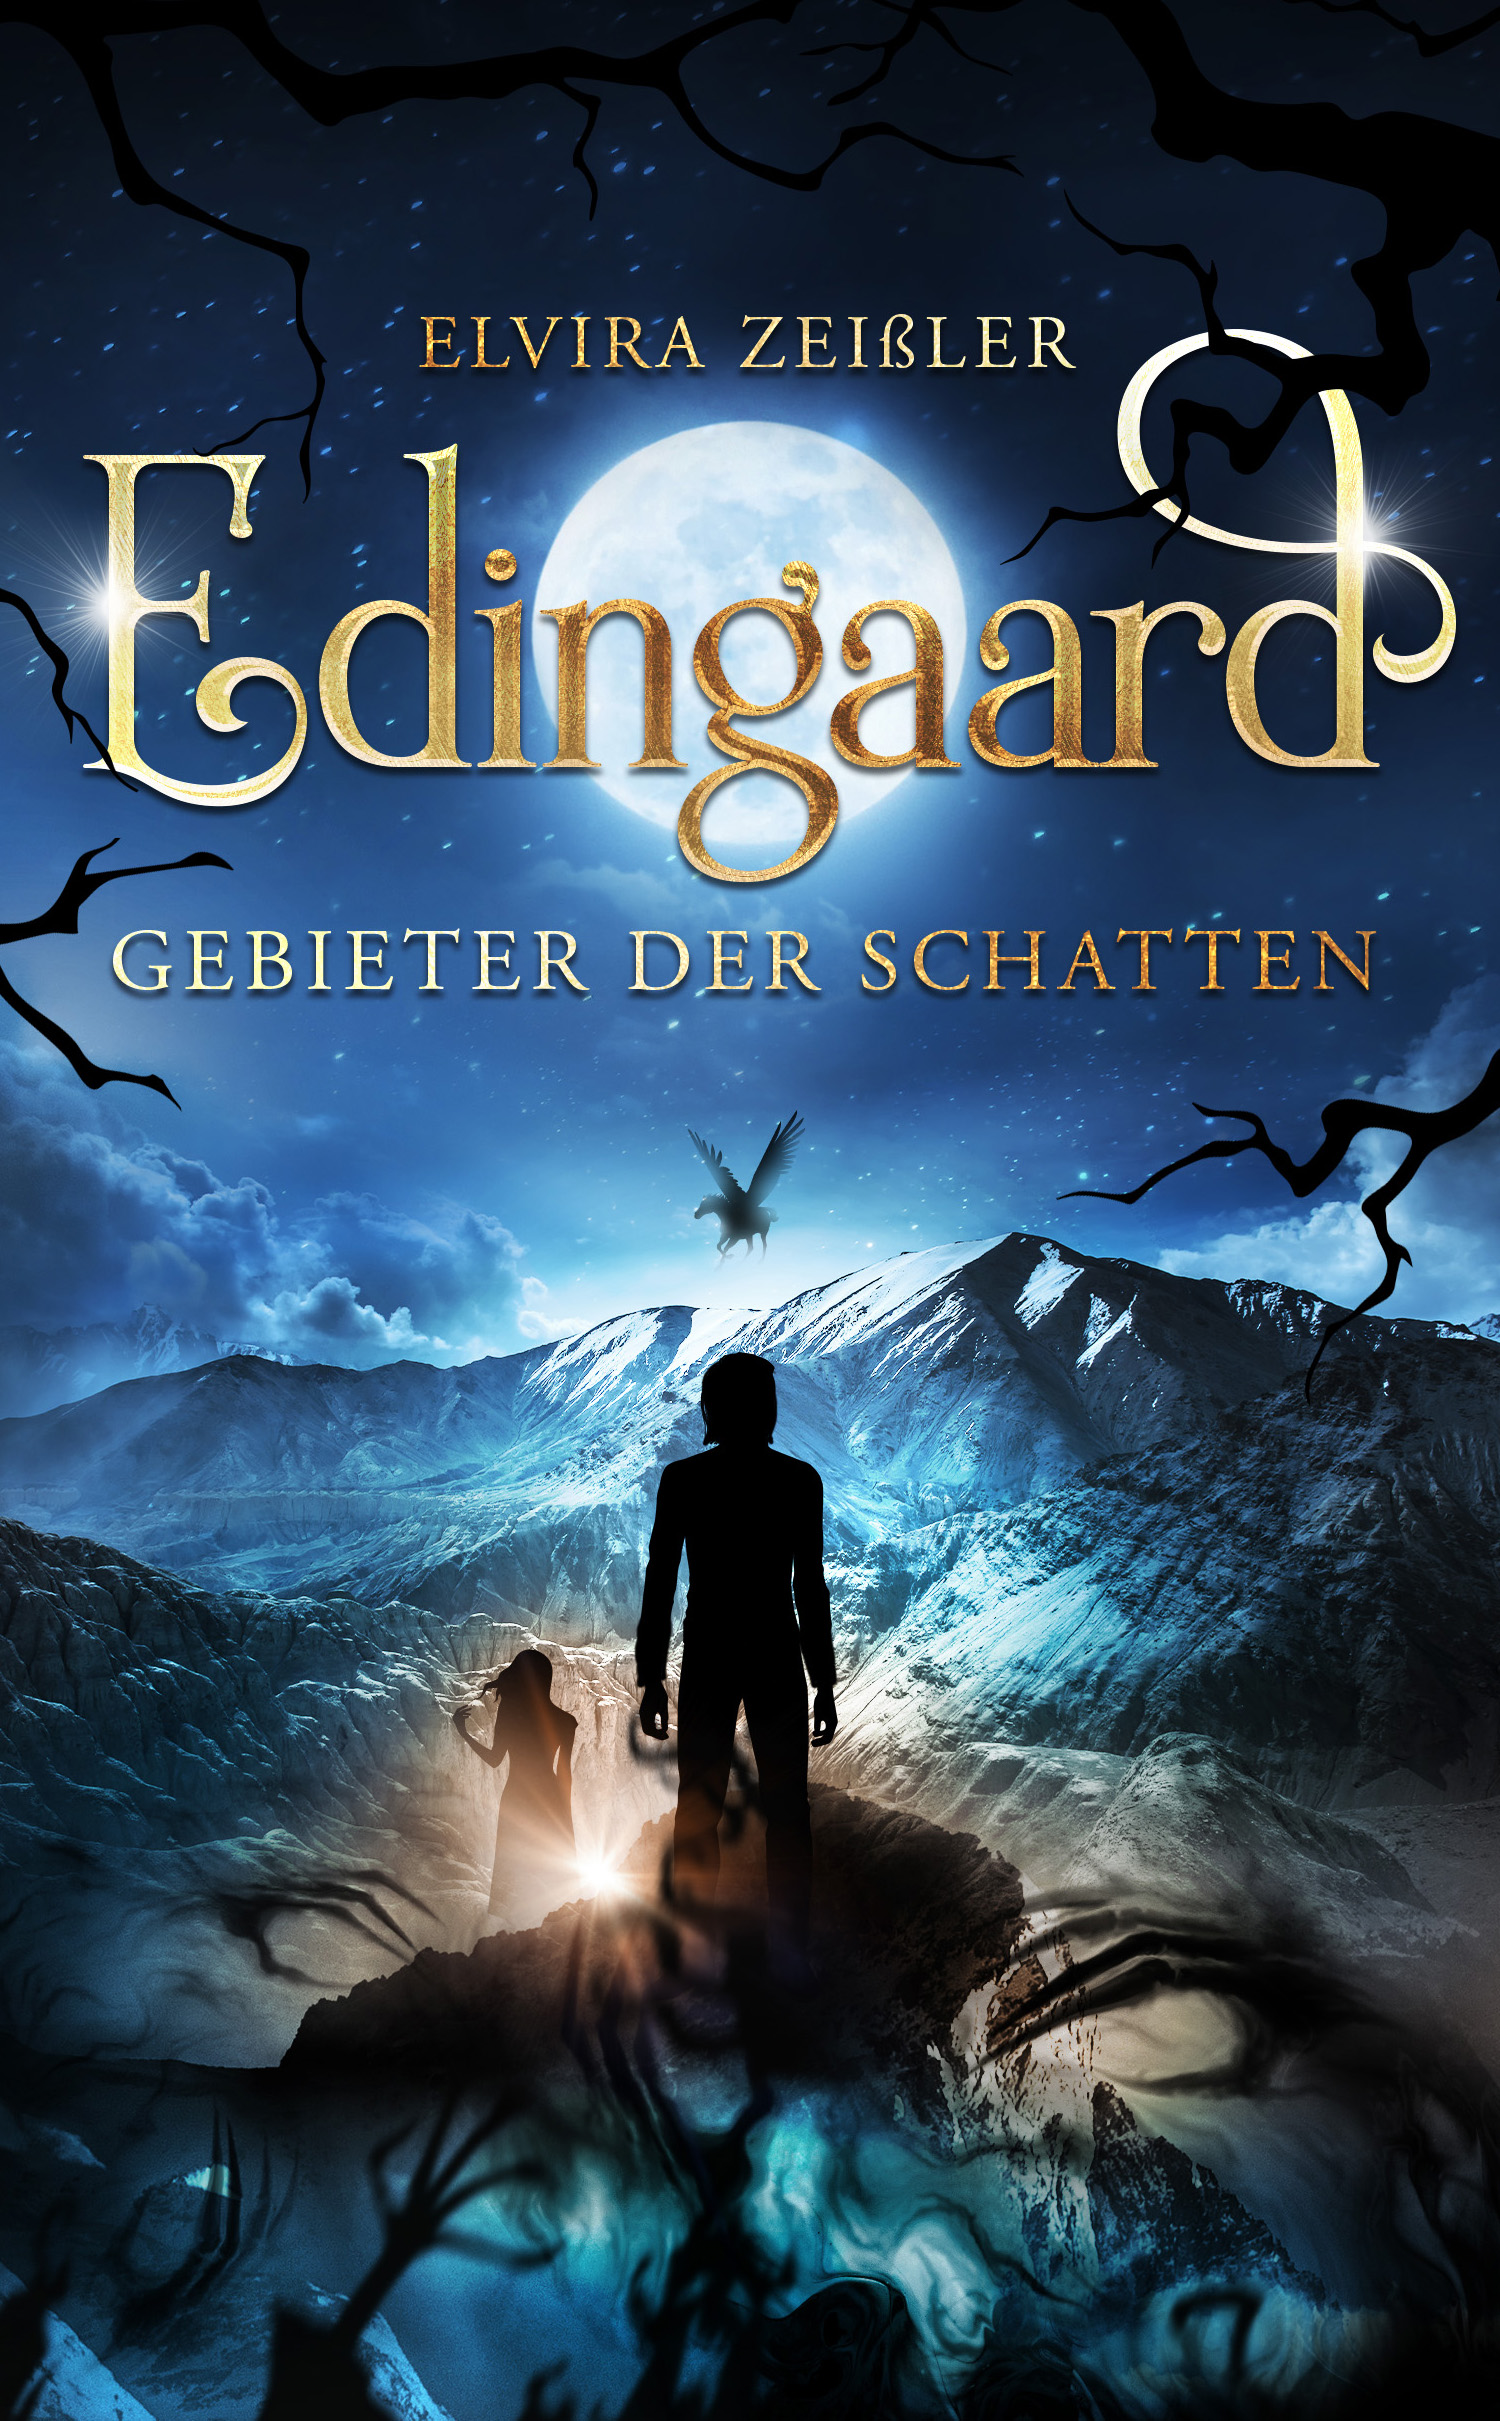 Edingaard – Gebieter der Schatten